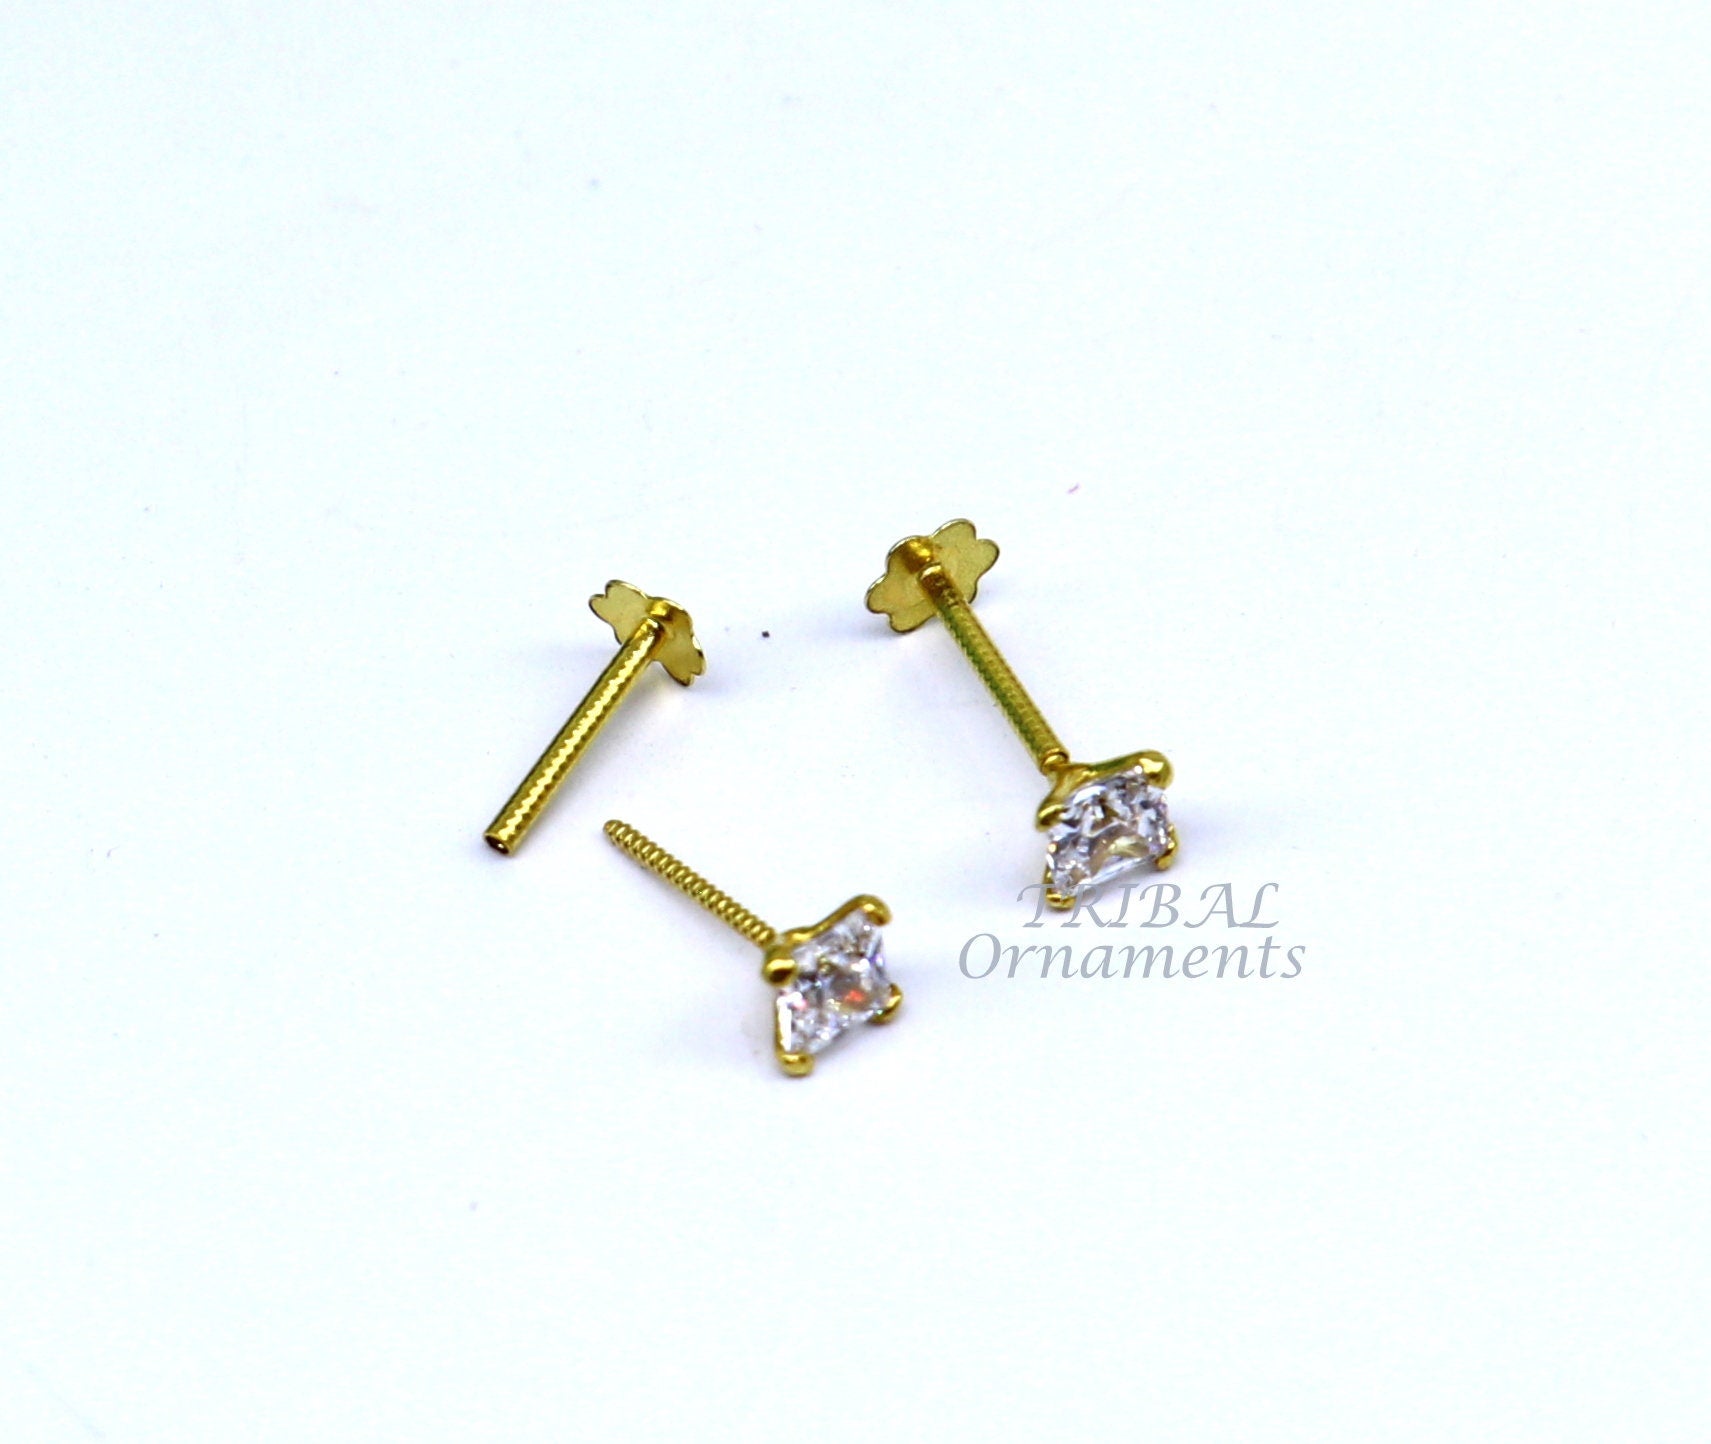 3mm 18kt yellow gold handmade single white stone back screw square shape stud earring cartilage customized unisex jewelry er144 - TRIBAL ORNAMENTS